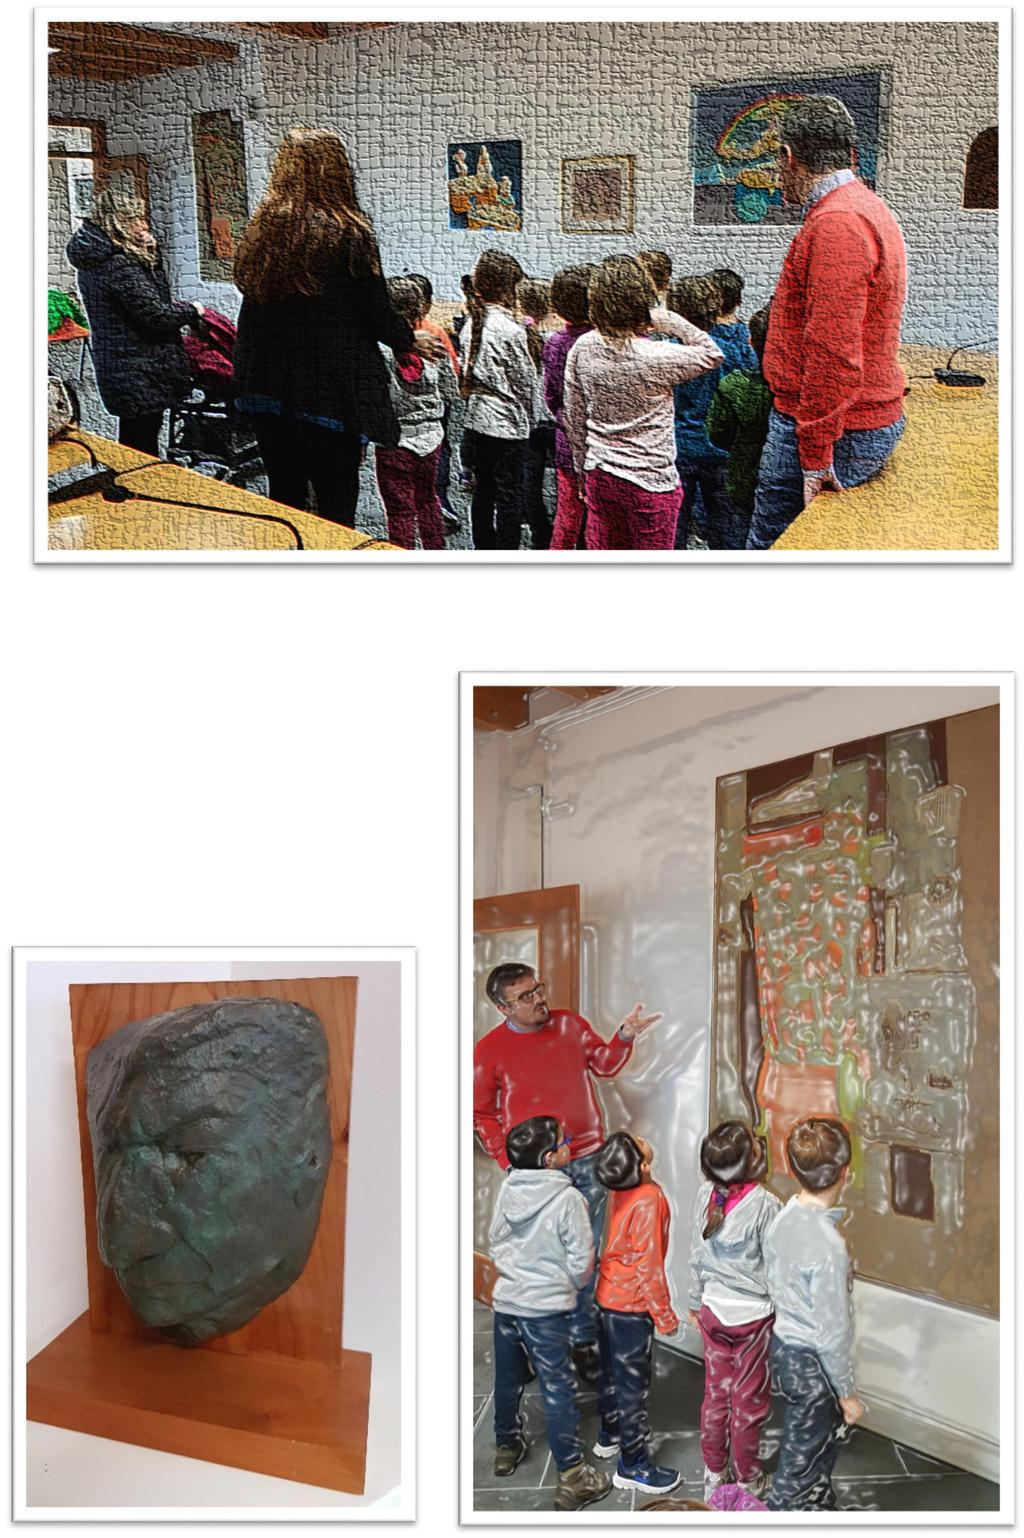 I bambini ammirano i quadri appesi alle